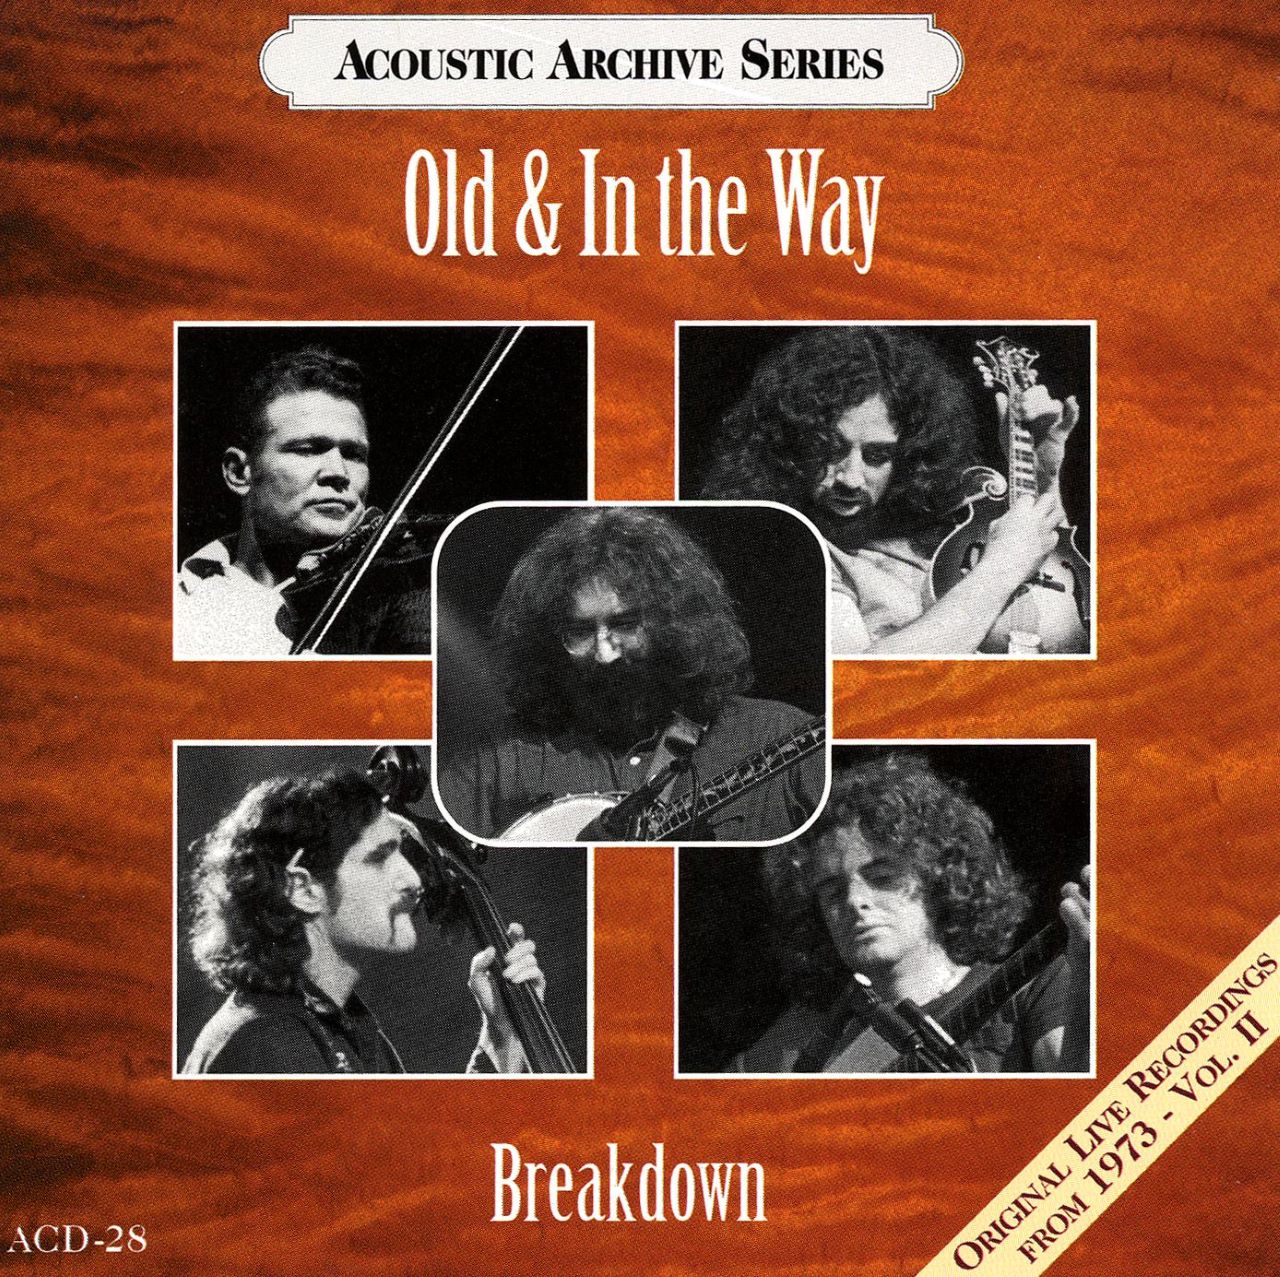 Old & In The Way - Breakdown cover album